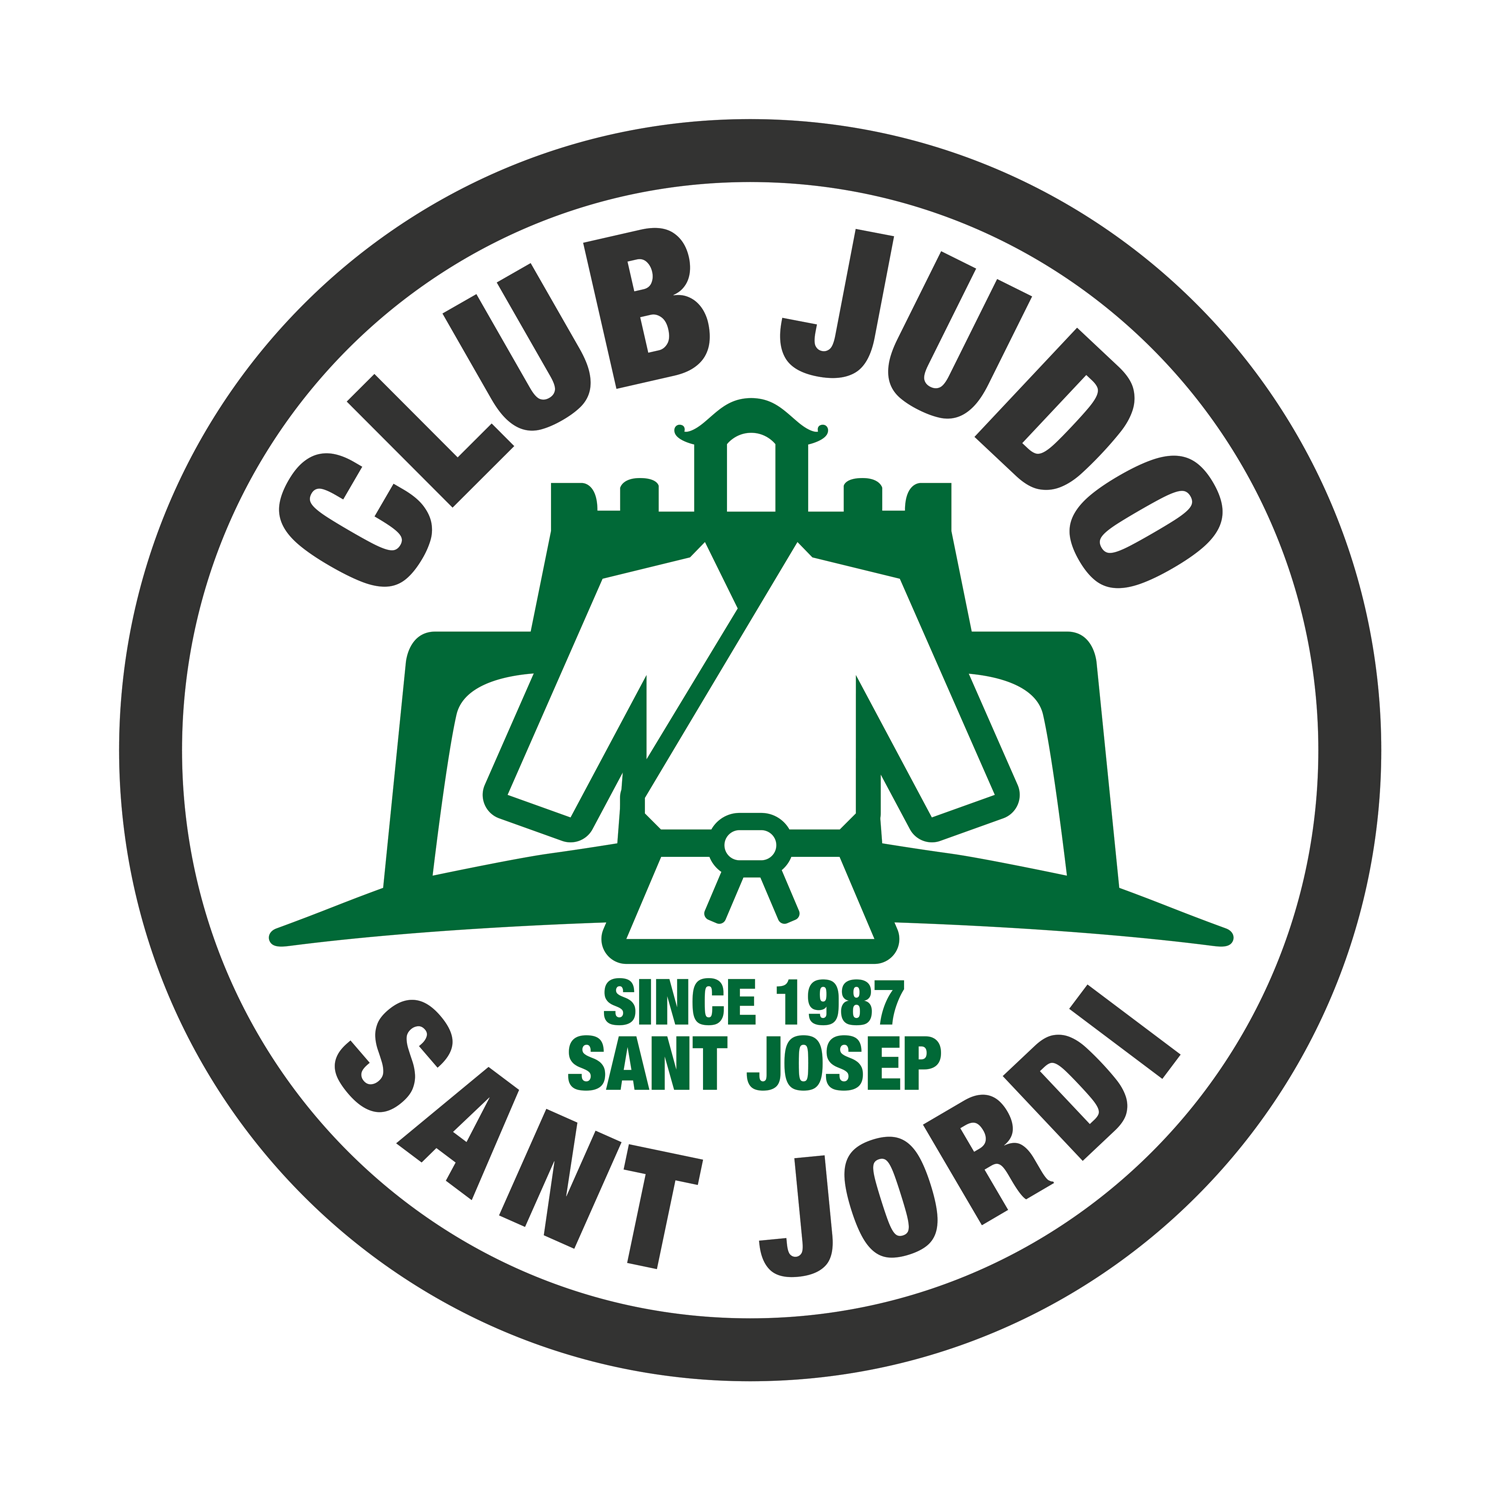 Club Judo Sant Jordi